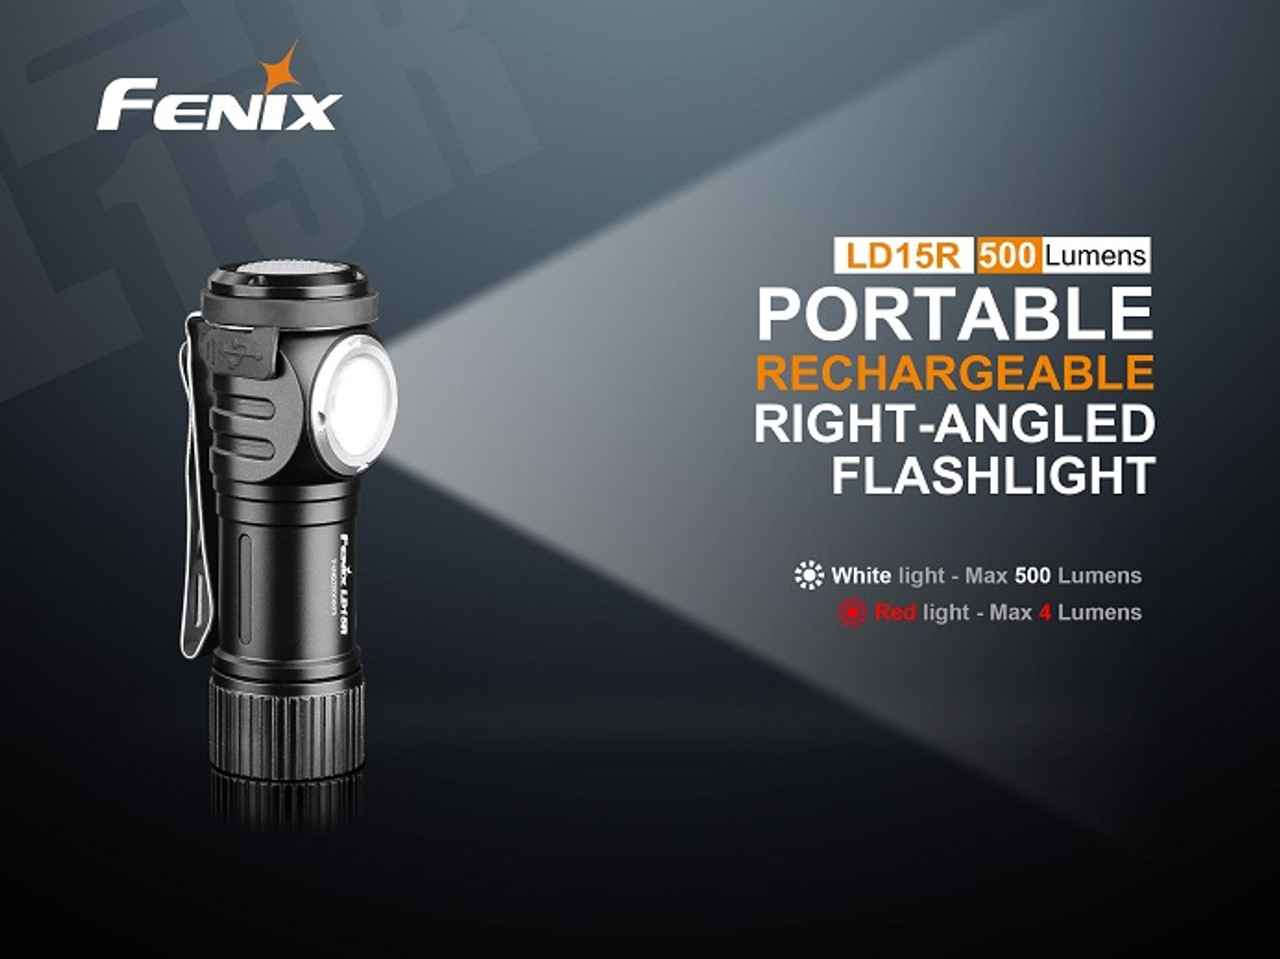 LD15R  Fenix Rechargeable Flashlight 500 lumens